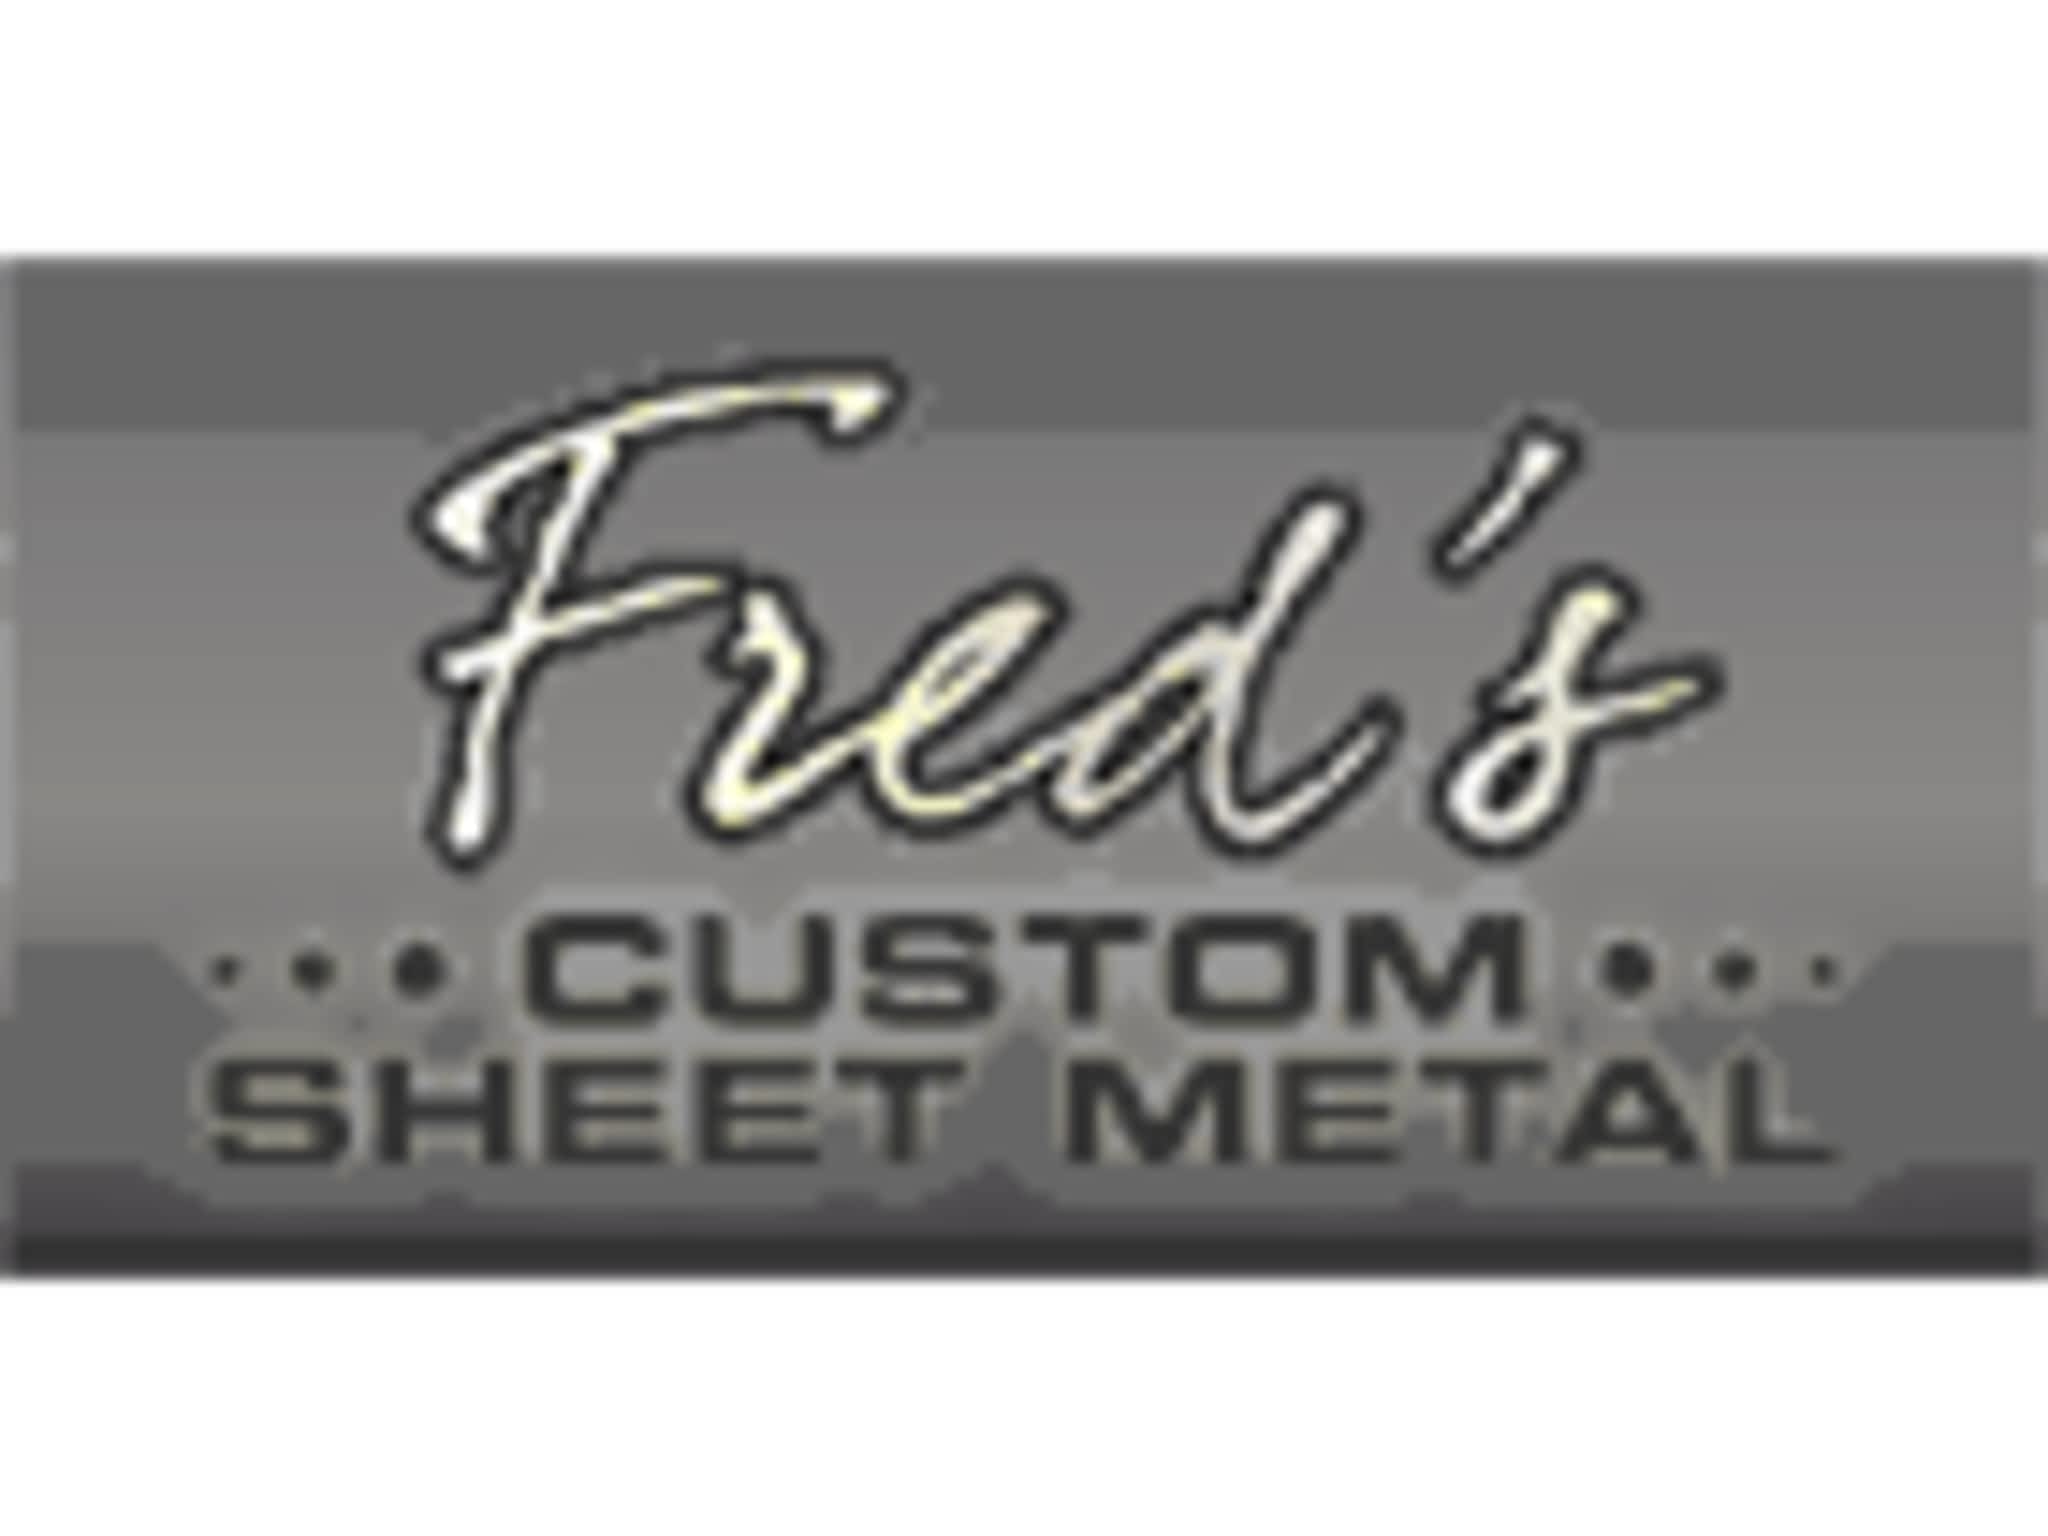 photo Fred's Custom Sheet Metal